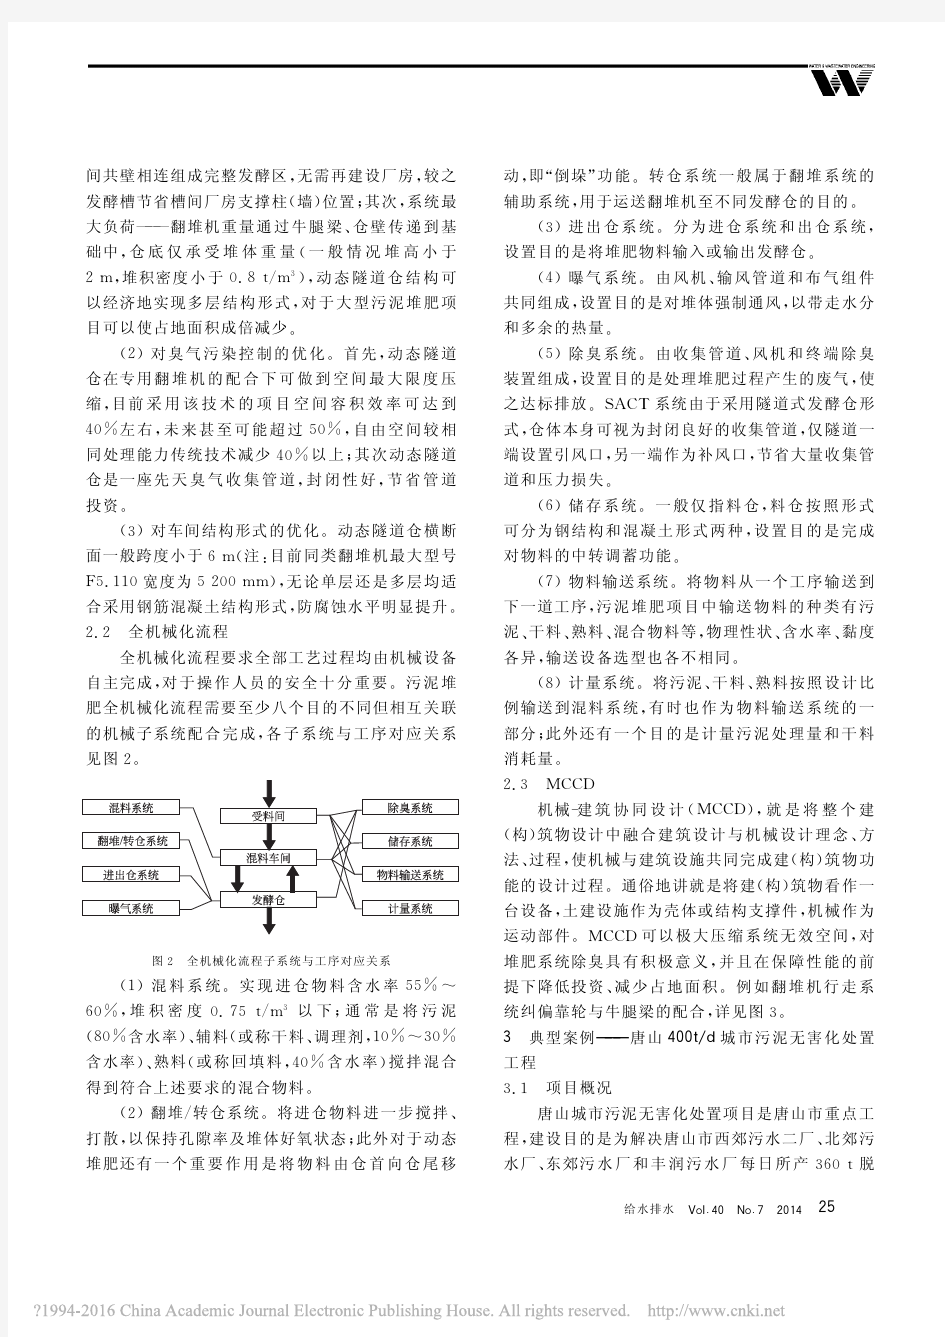 SACT污泥高温好氧发酵技术典型案例分析_王涛